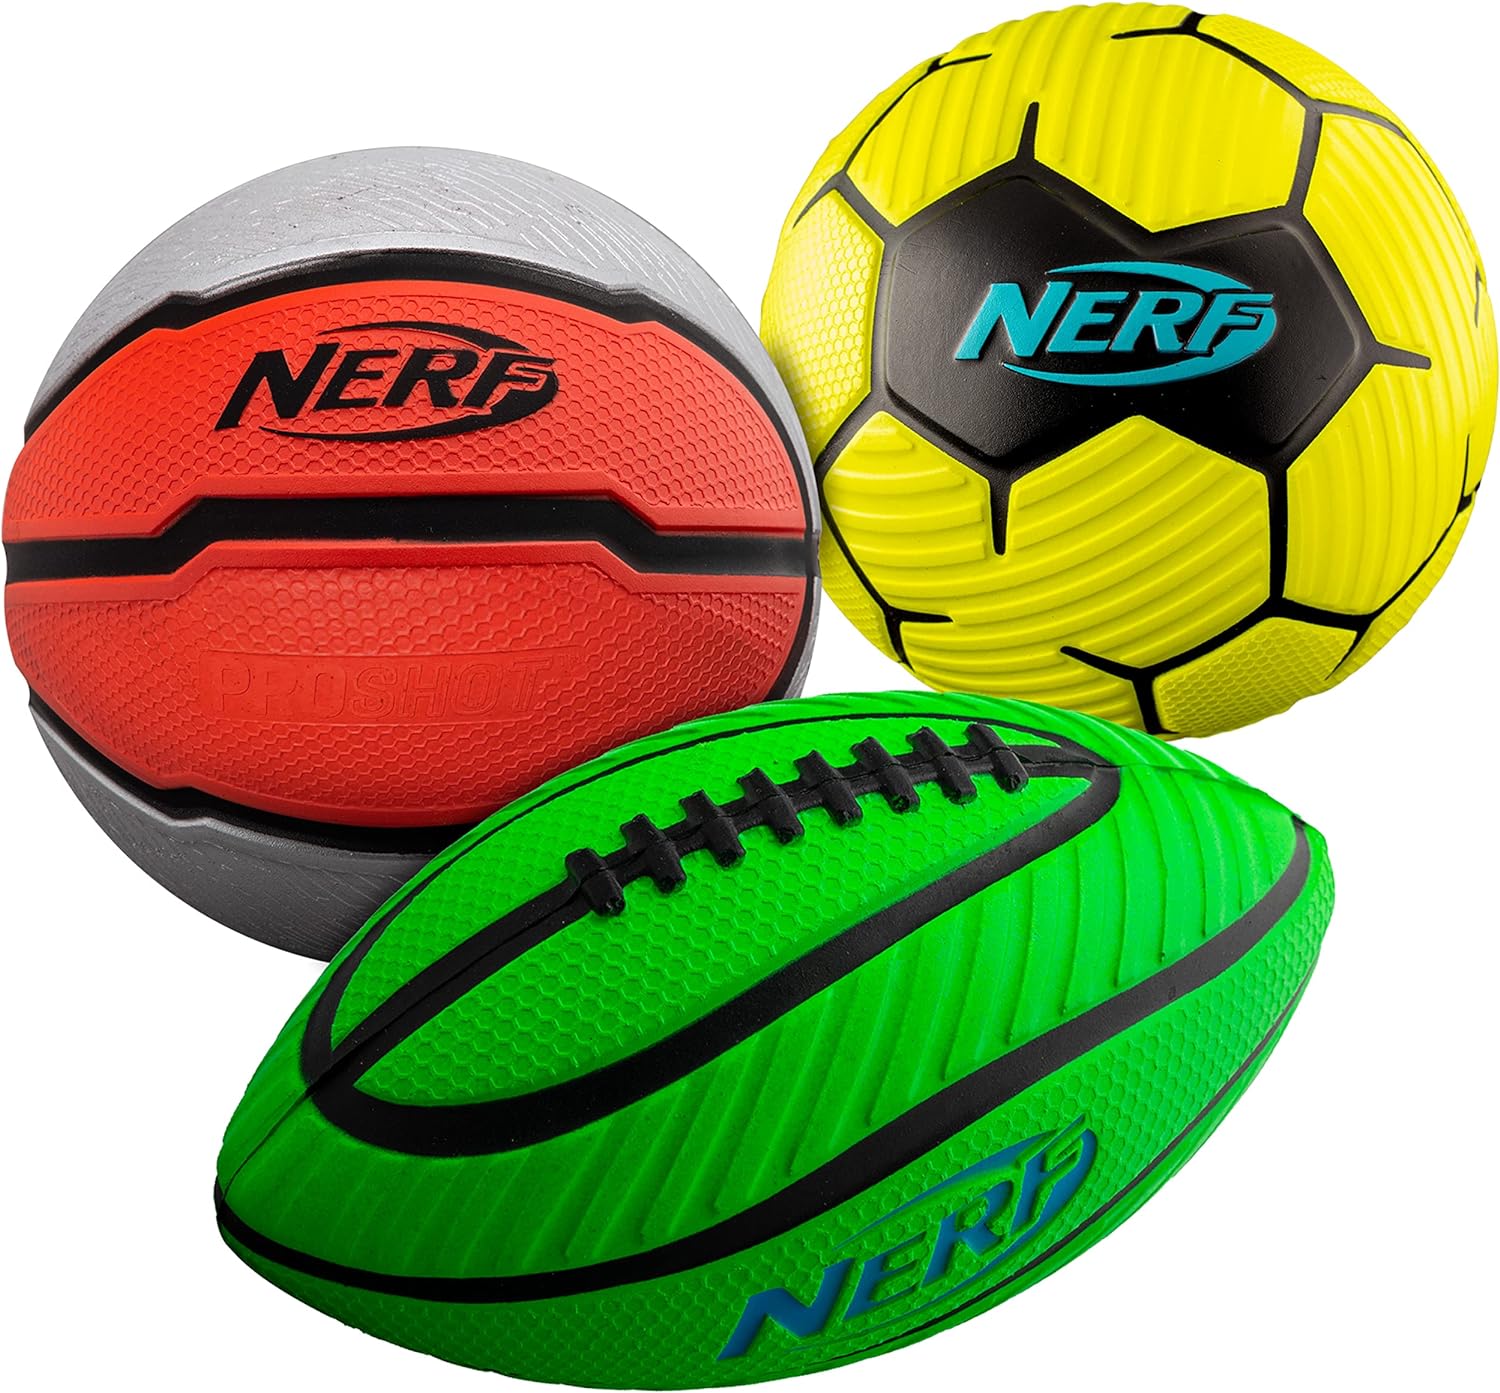 NERF Mini Foam Ball Set - Football, Soccer Ball and Basketball - Soft Foam Balls for Kids - Multicolor